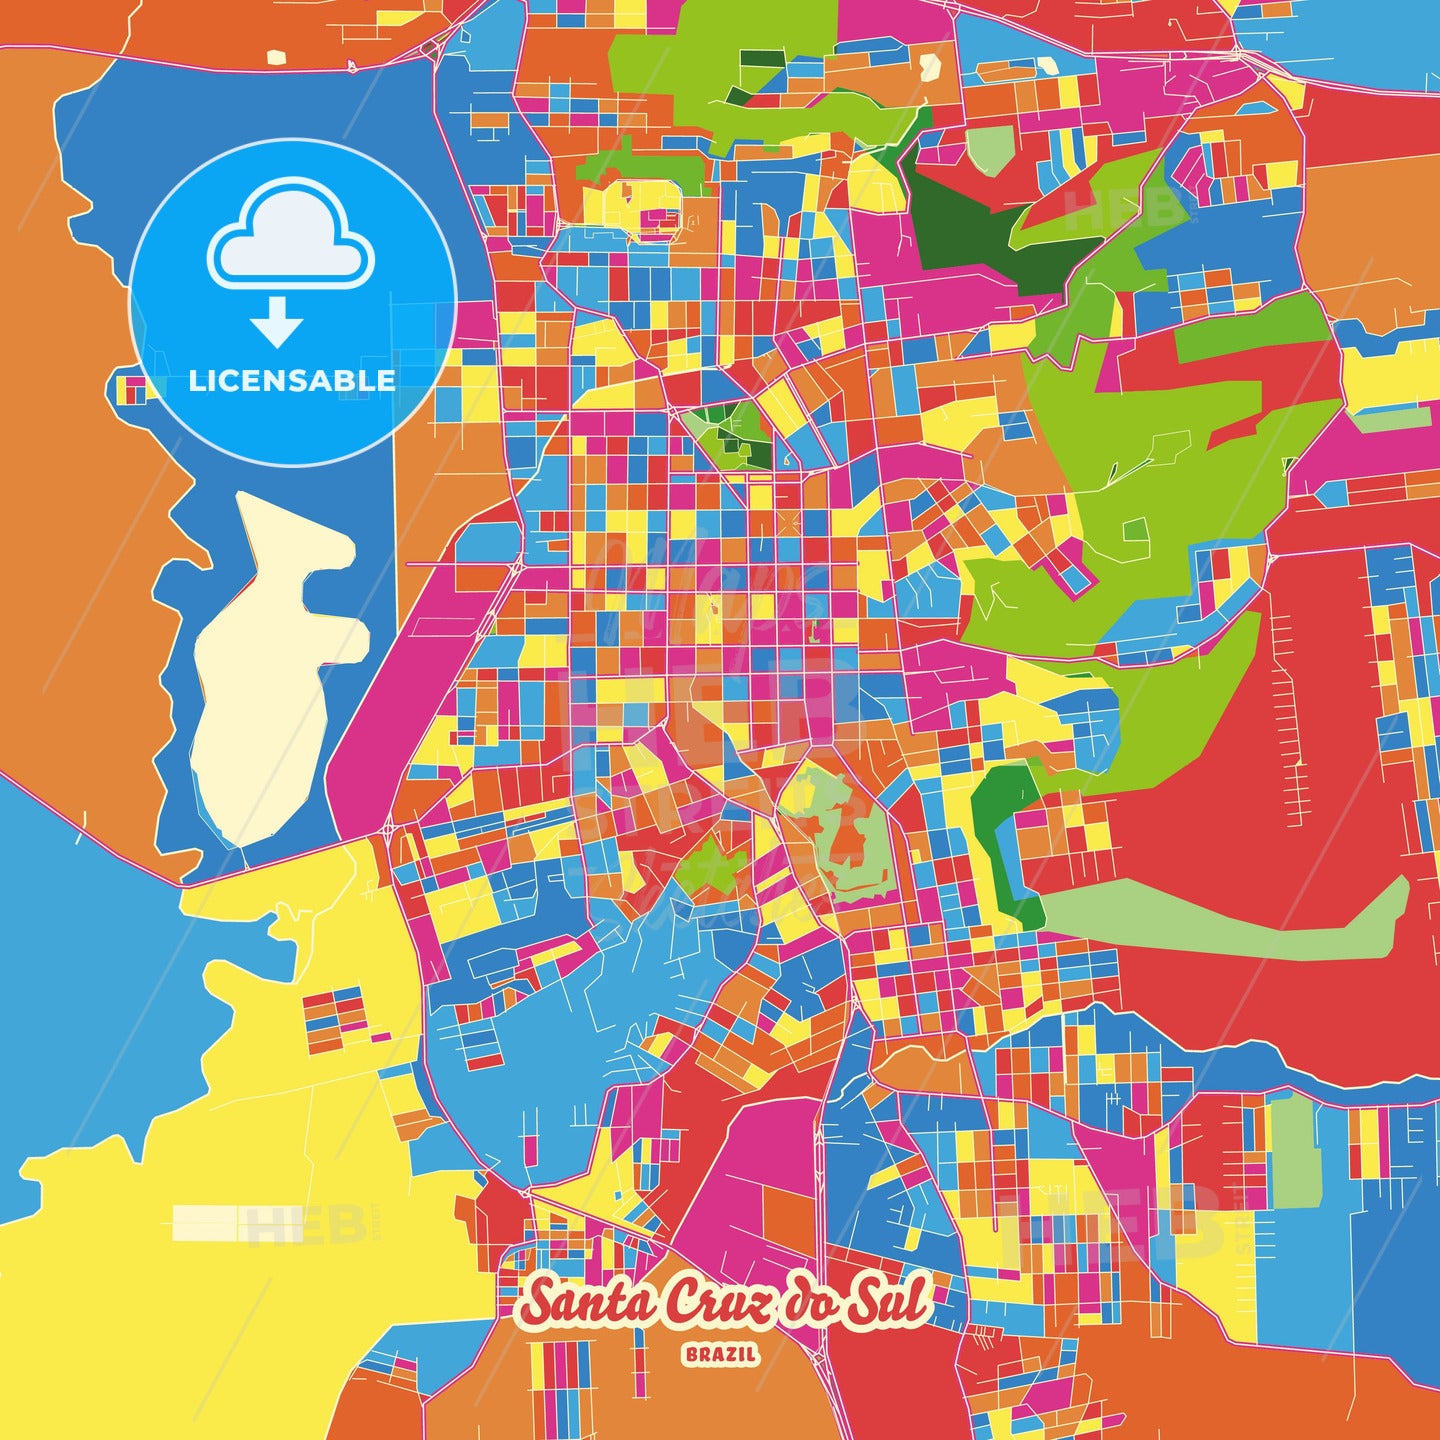 Santa Cruz do Sul, Brazil Crazy Colorful Street Map Poster Template - HEBSTREITS Sketches